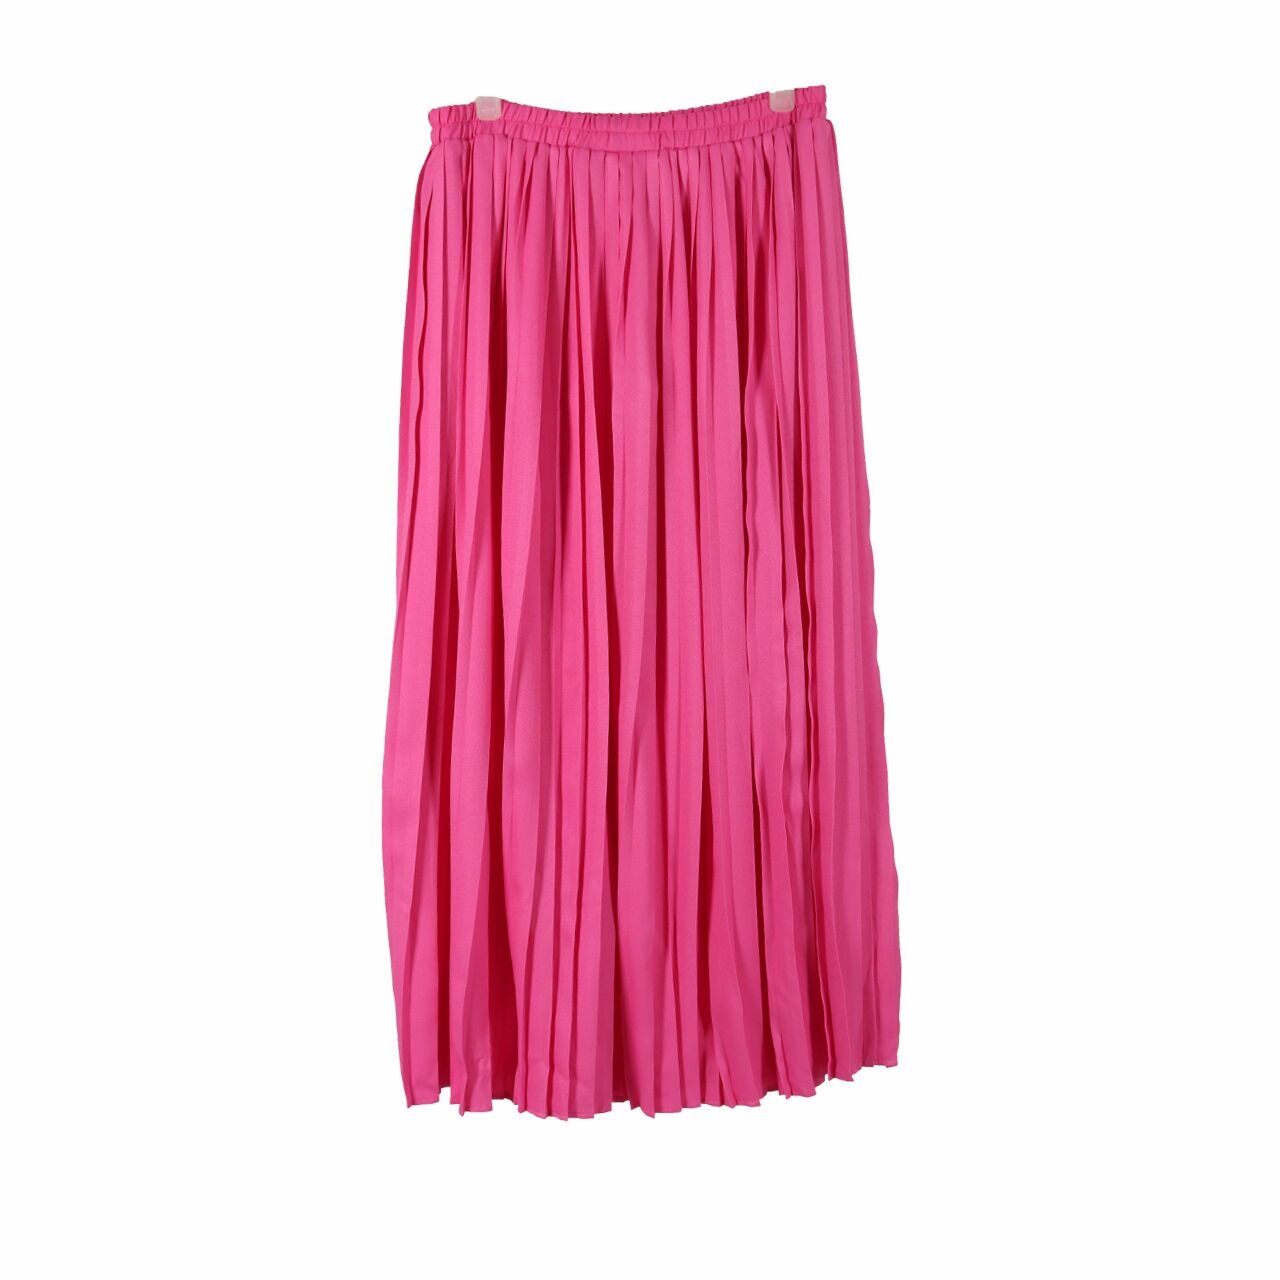 hijab chic Pink Plisket Maxi Skirt